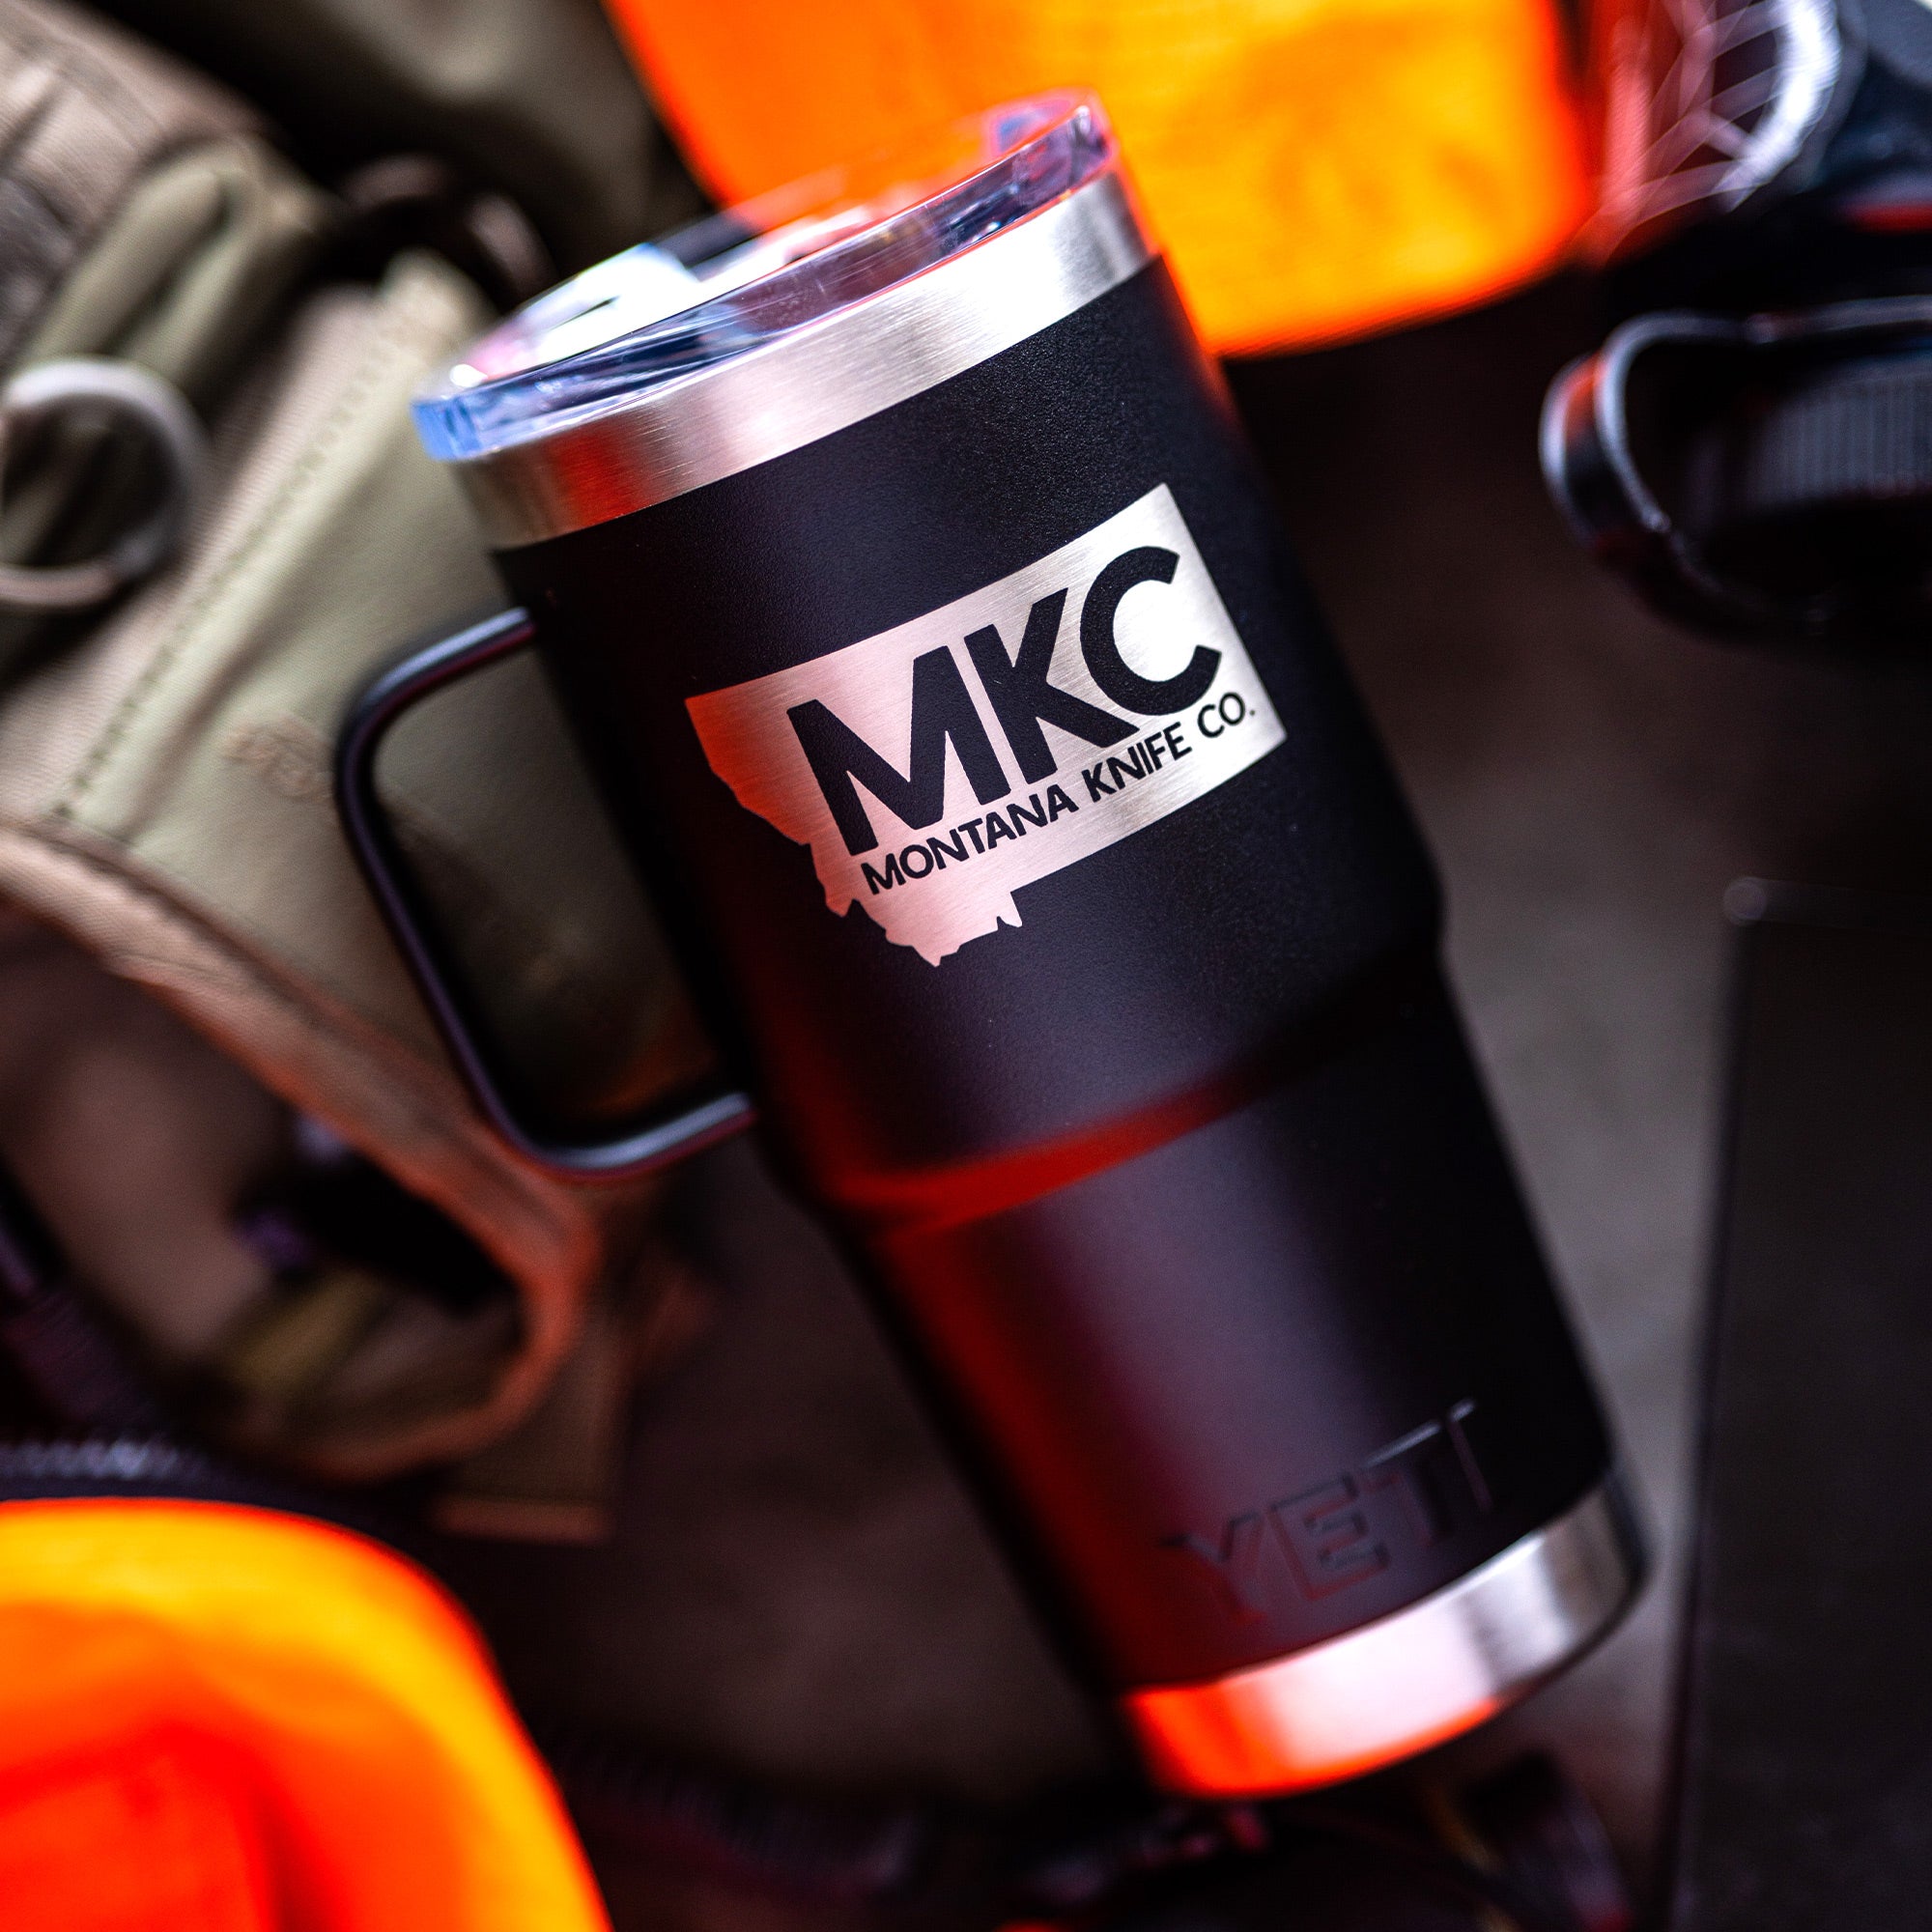 Yeti Mountain Rambler 20 oz Travel Mug – Black Rifle Coffee Company